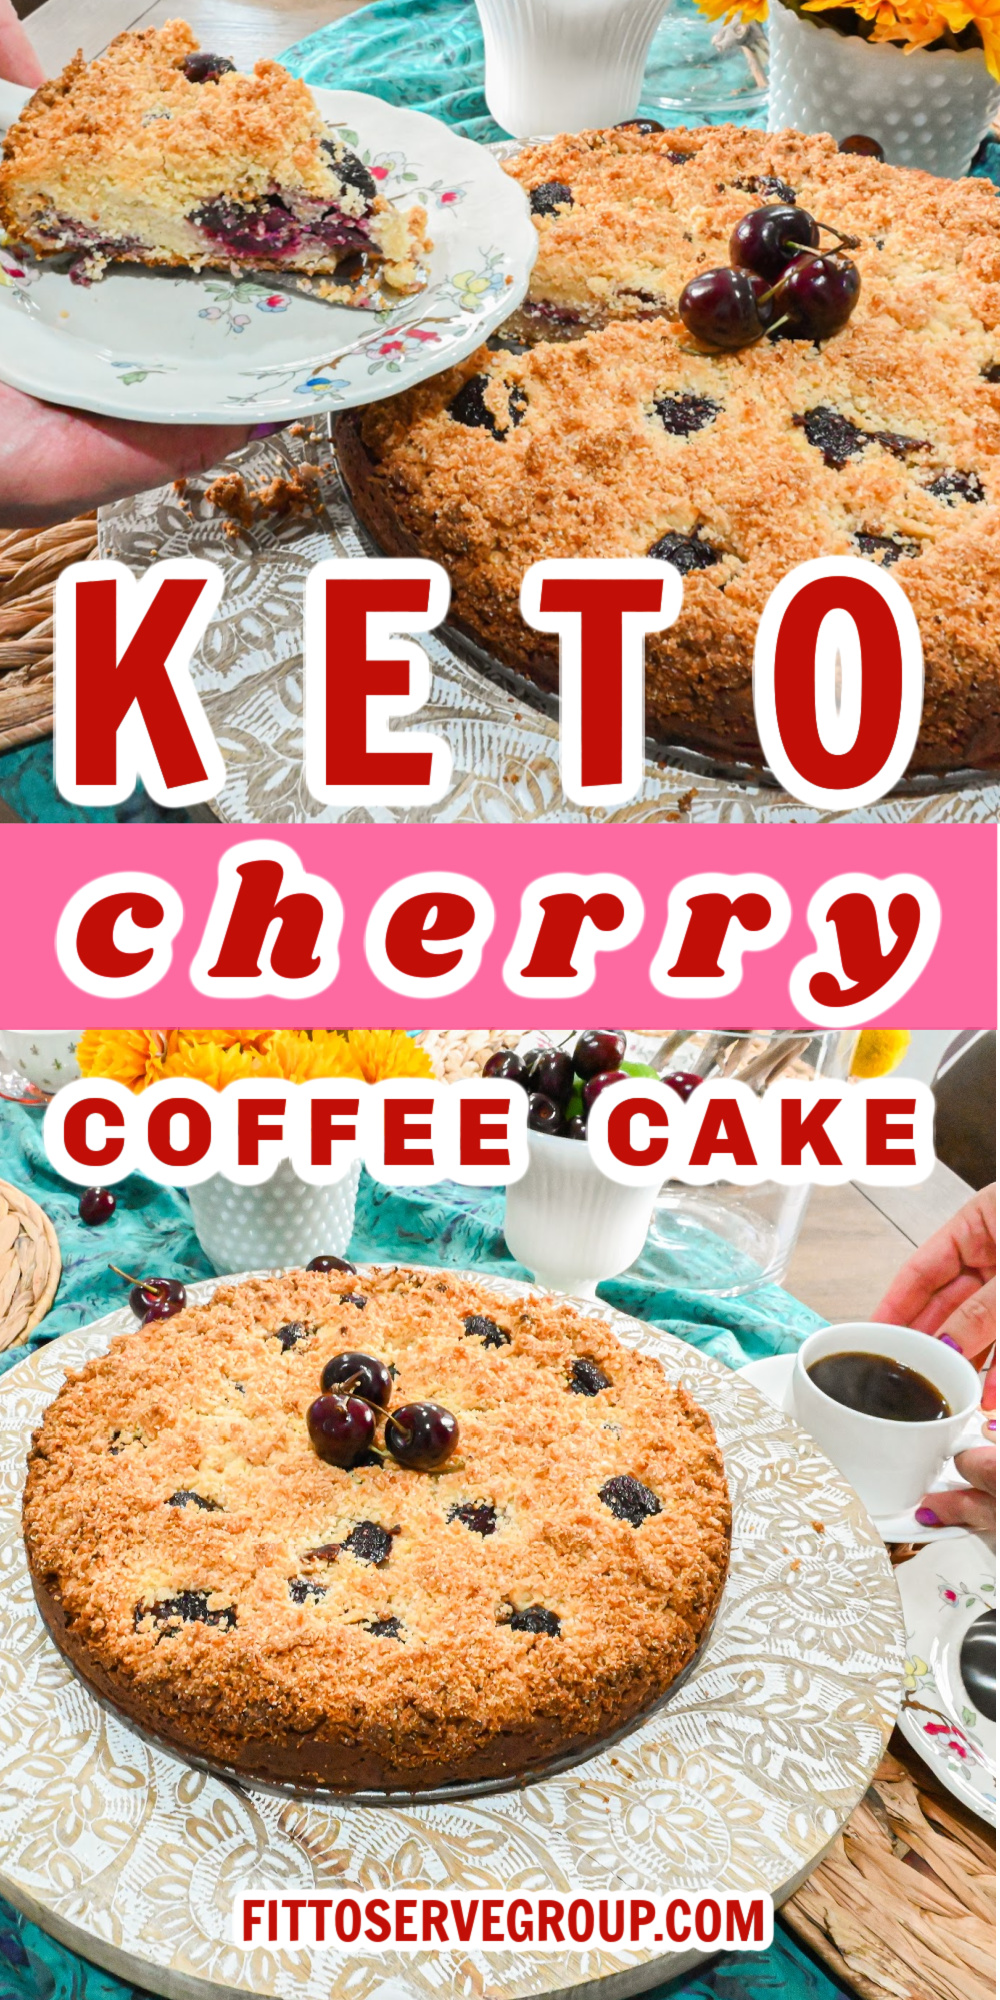 Keto Cherry Coffee Cake Pin